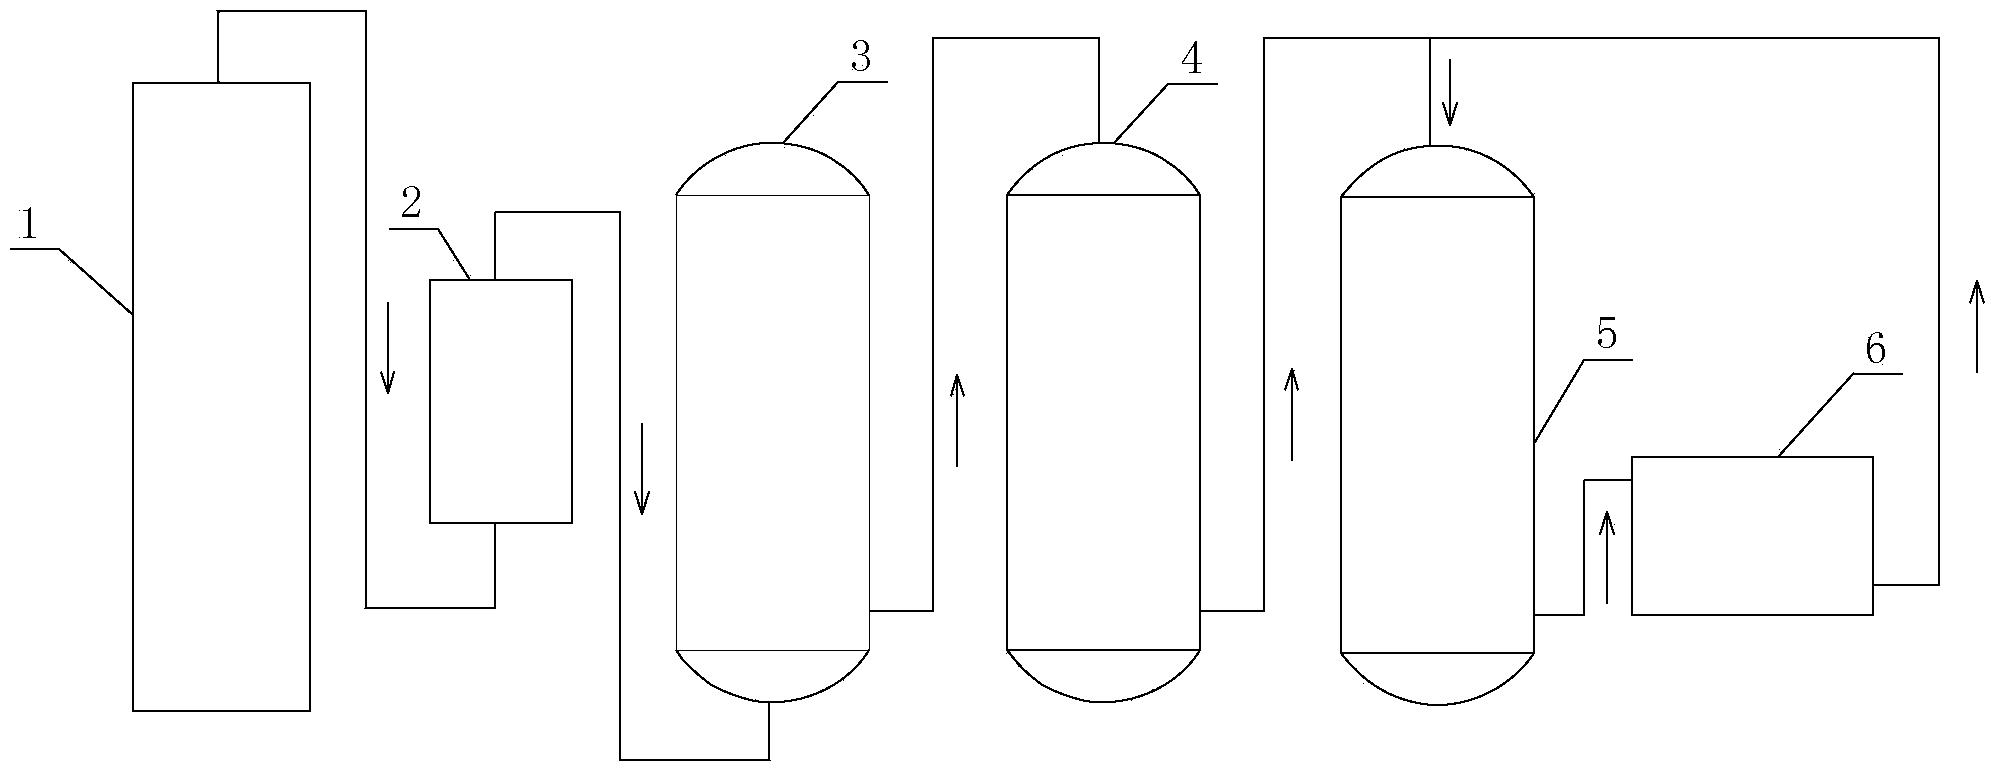 Preparation method of D,L-2-hydroxy-4-methylthiobutyric acid-trace element chelate